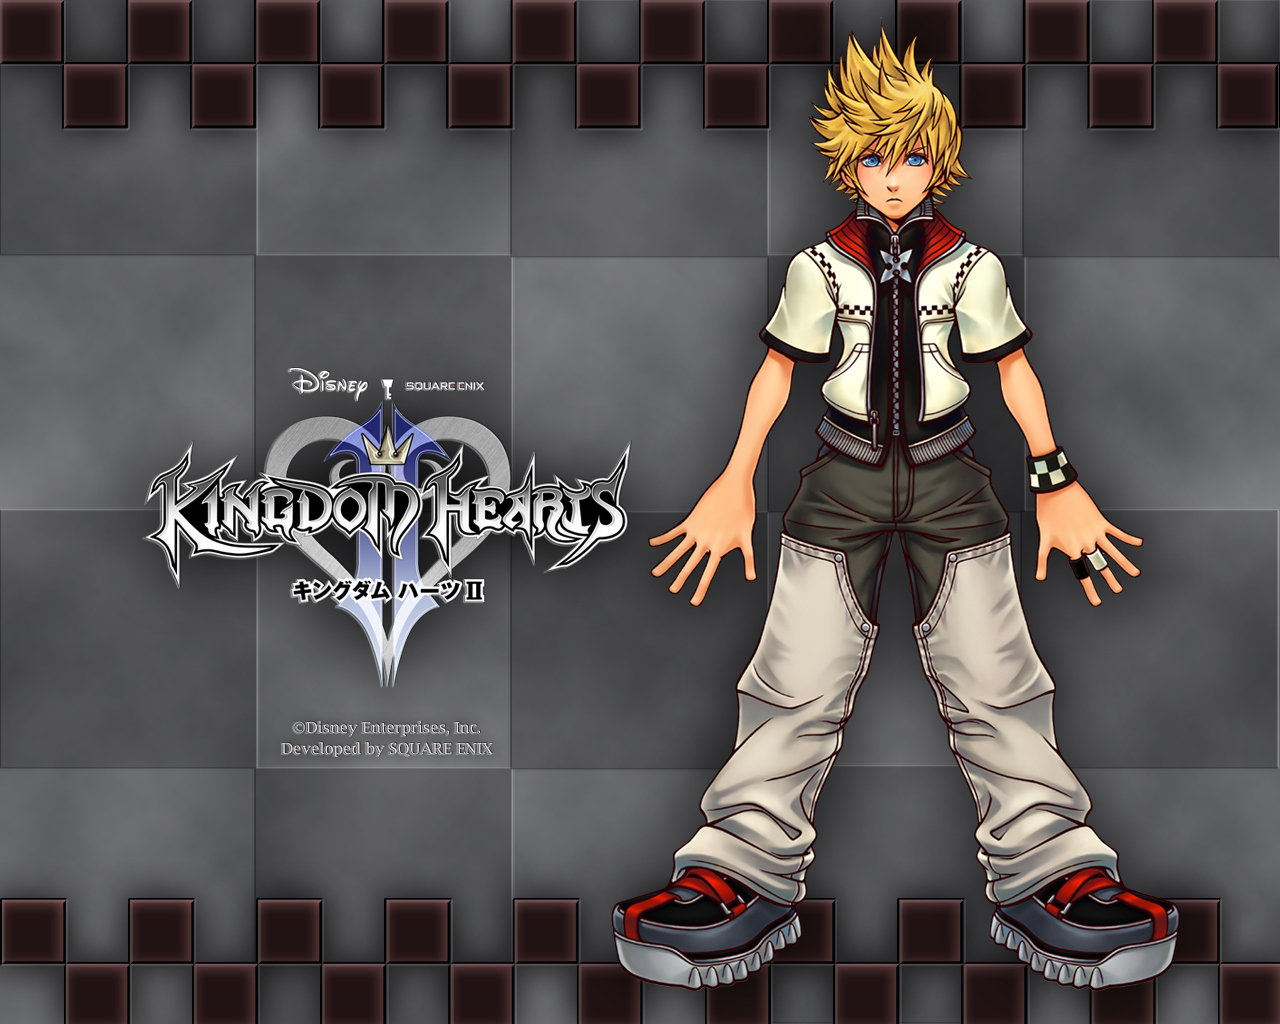 The Boys Of Kingdom Hearts Image Roxas HD Wallpaper And